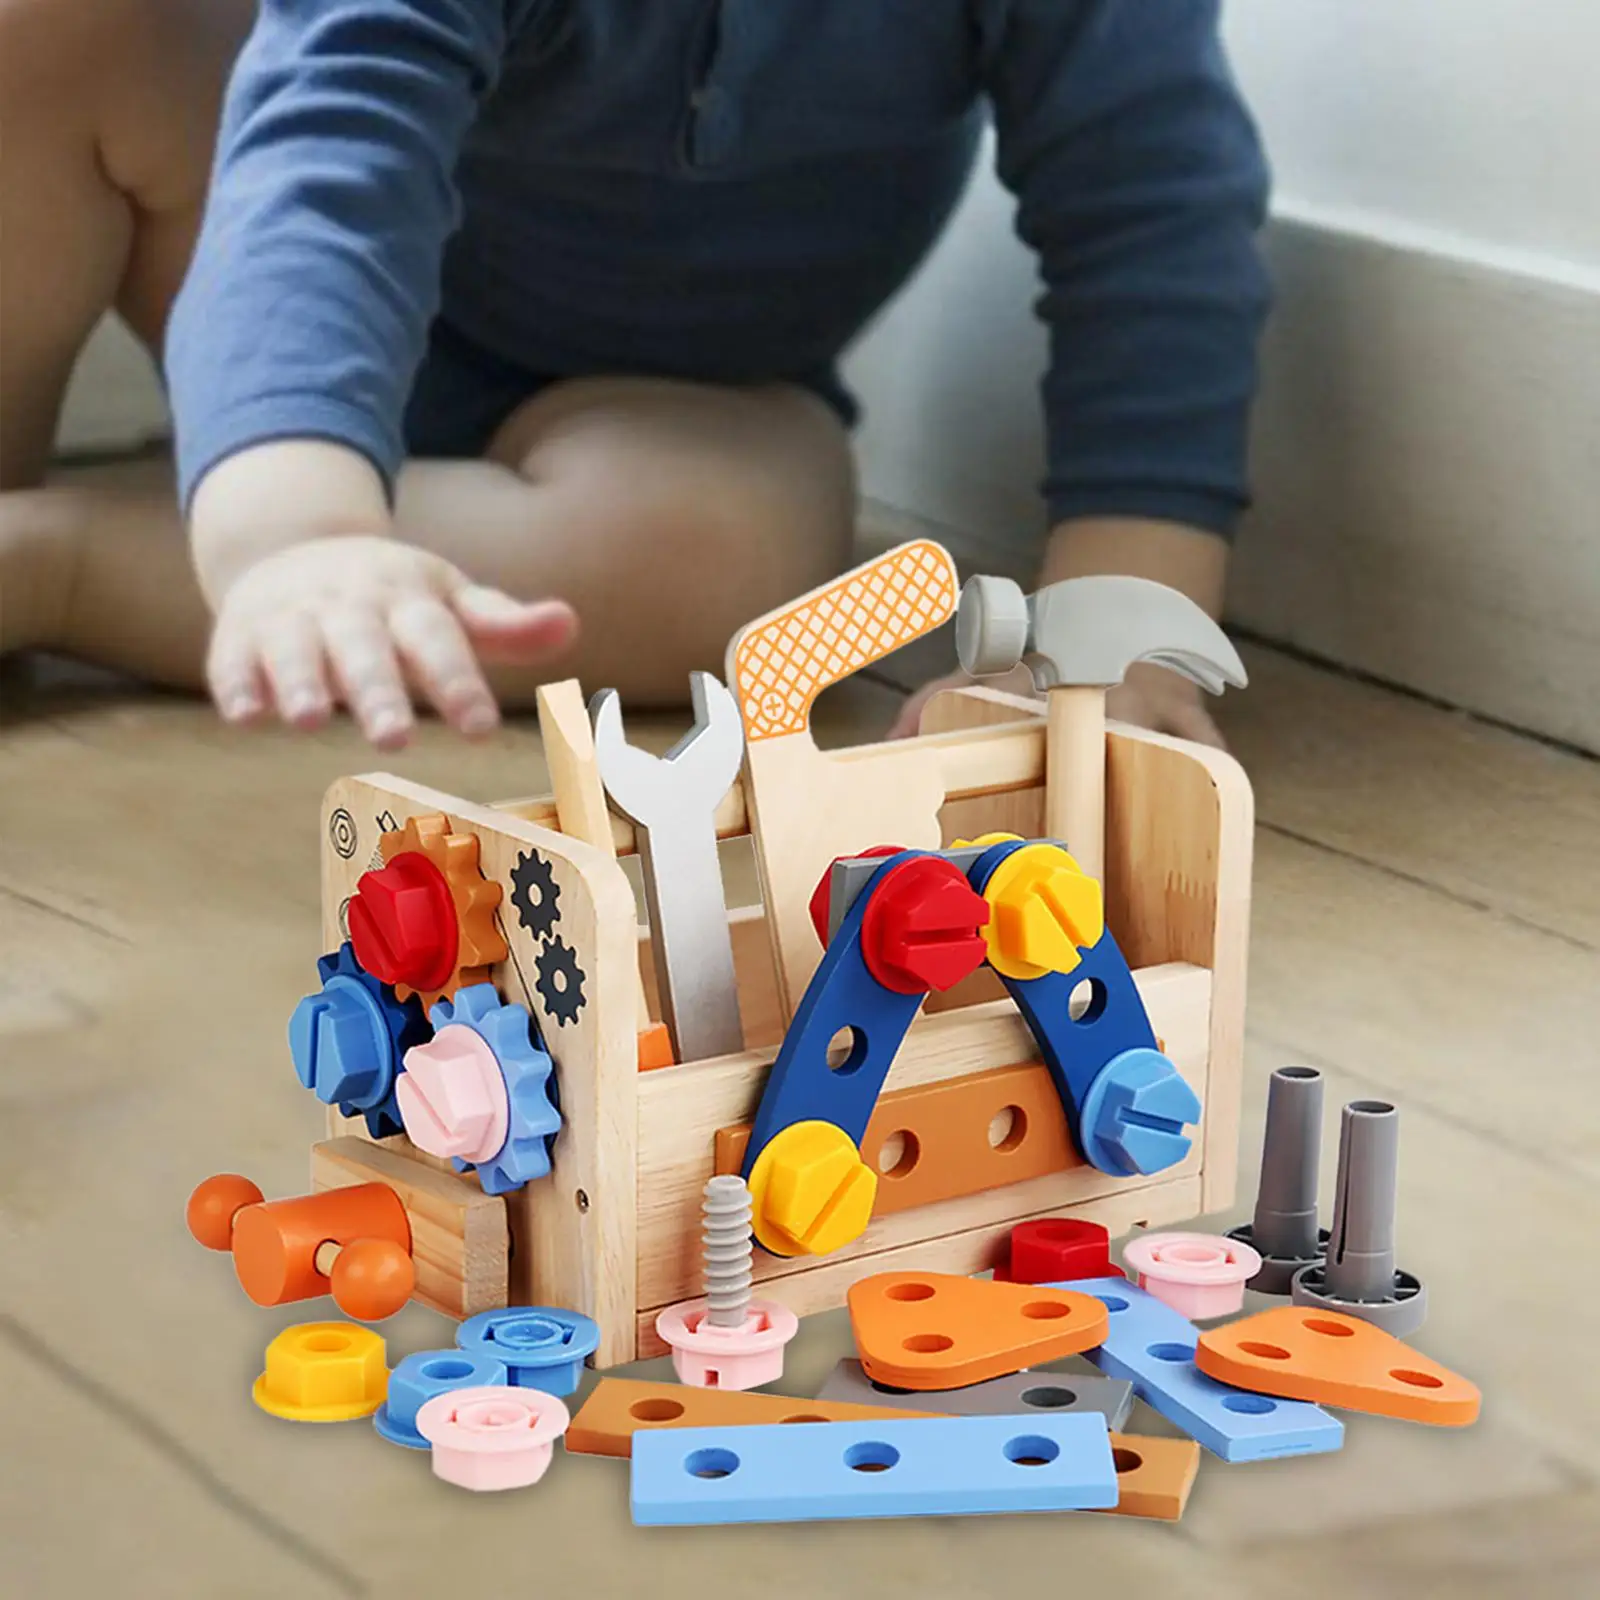 Toolbox Toy Birthday Gift Montessori Educational Gift Gift for Boys Girls